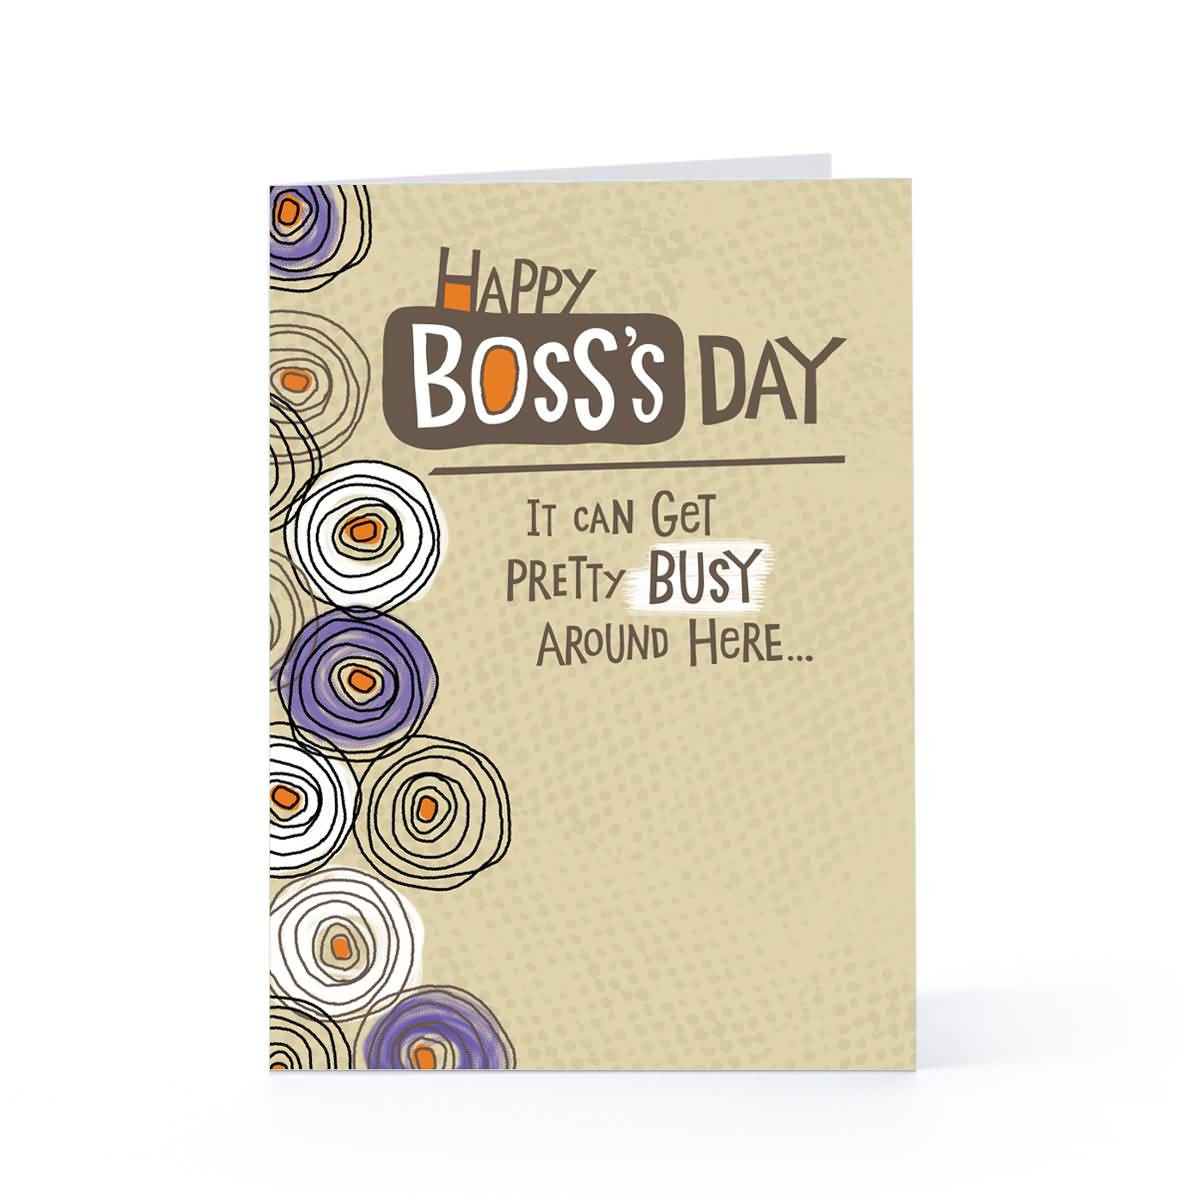 Boss Birthday Card
 40 Most Beautiful Happy Boss Day 2016 Greetings